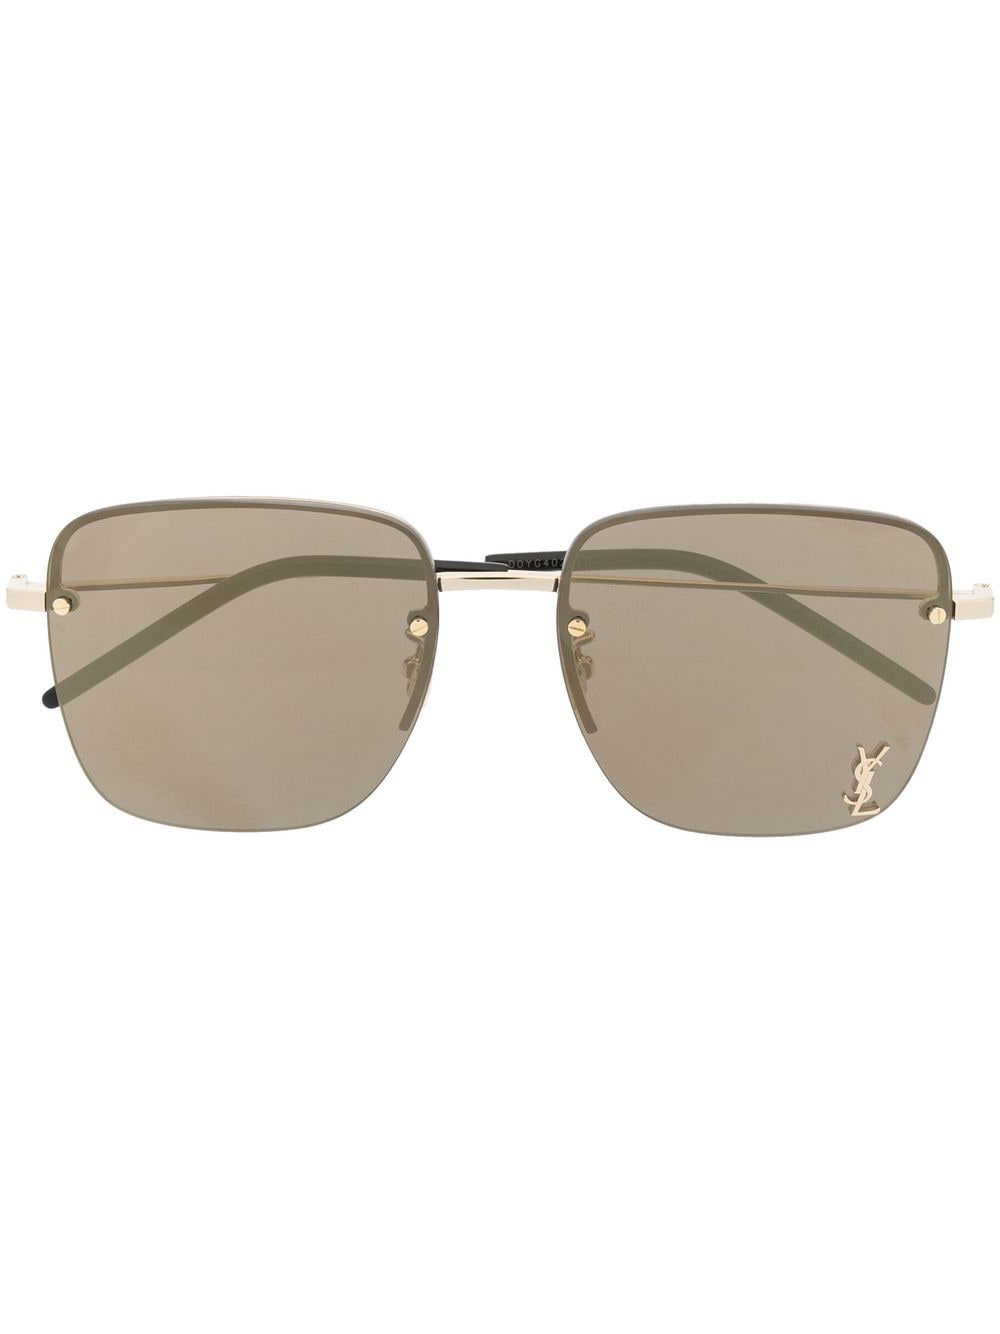 Buy Louis Vuitton Sunglasses Online In India -  India